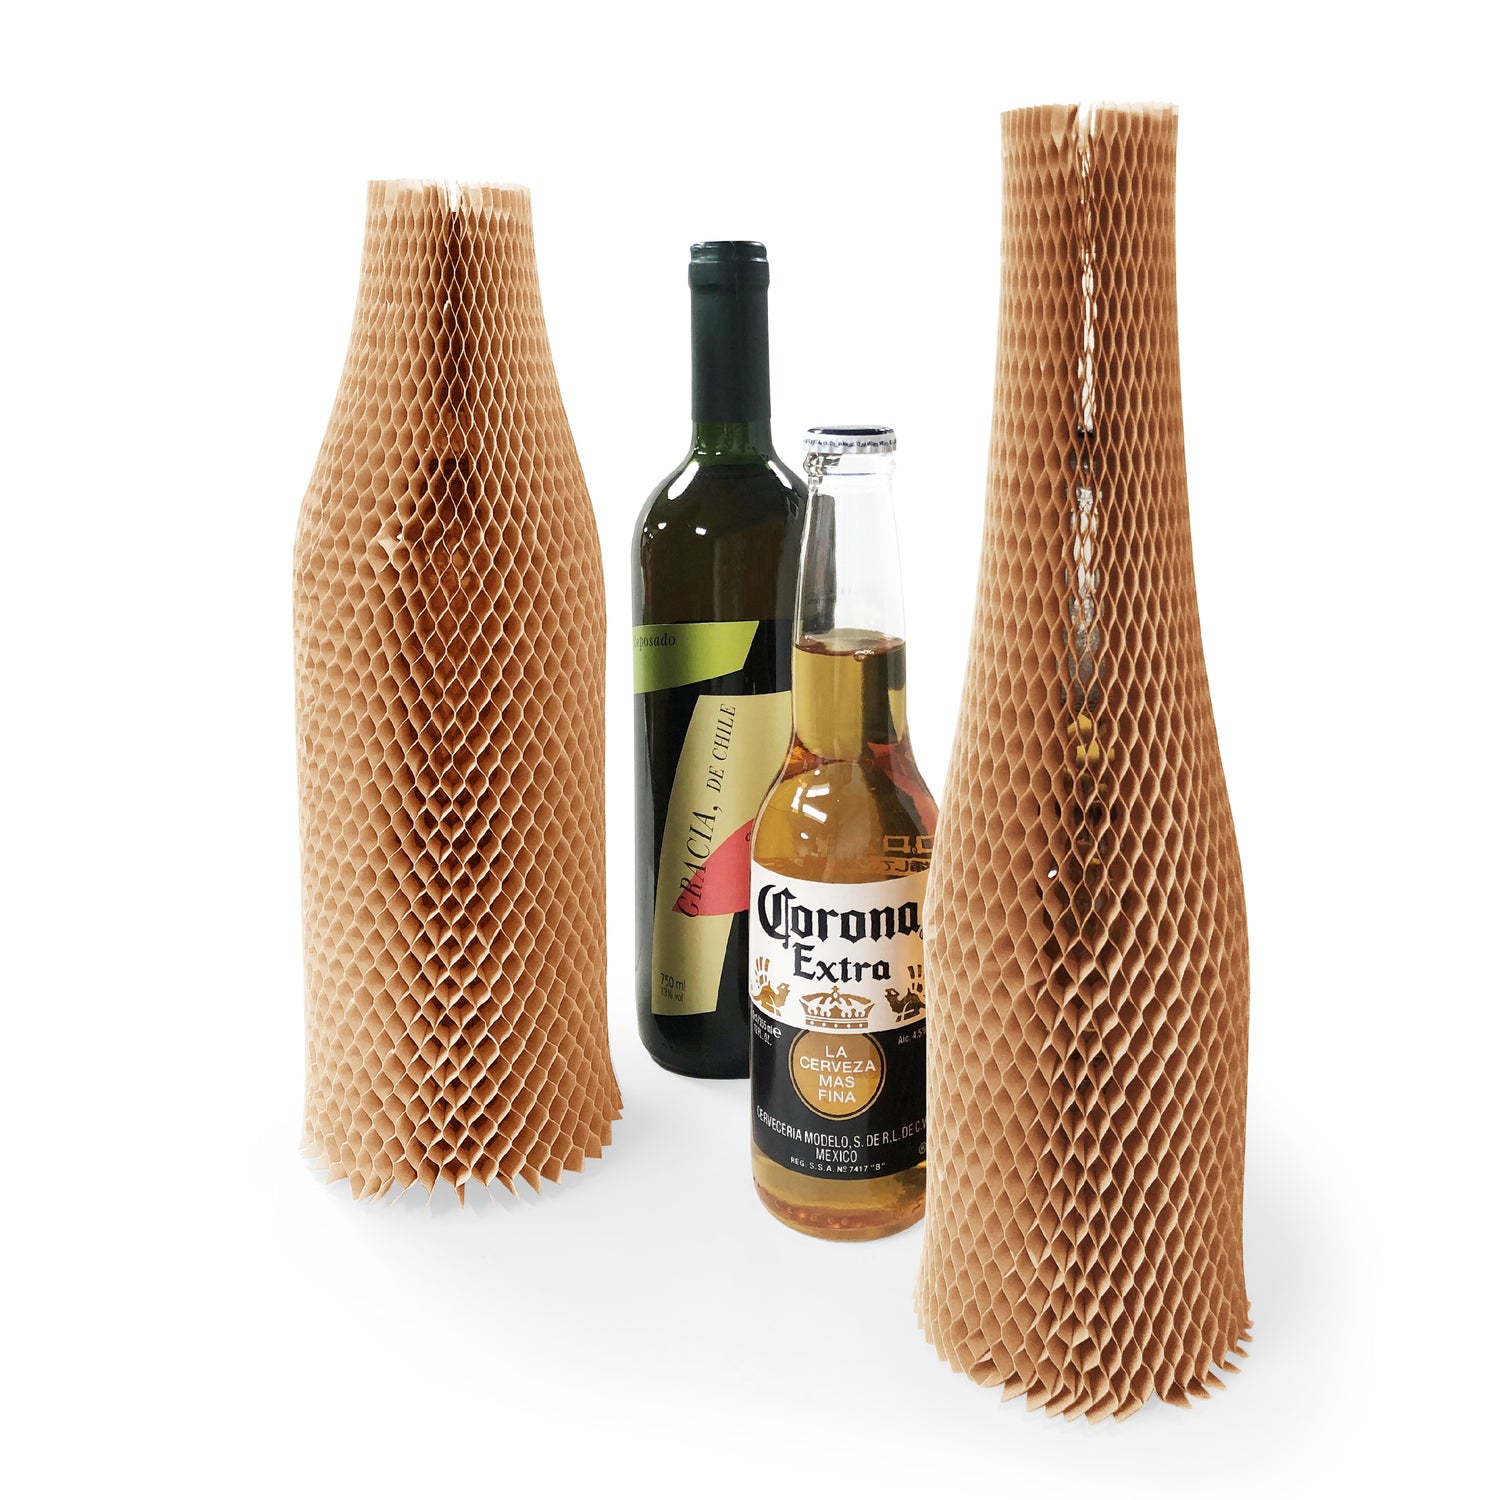 3D Honeycomb Cushioning Wrapping Paper Sleeve 穿戴式立體緩衝蜂巢包裝紙套